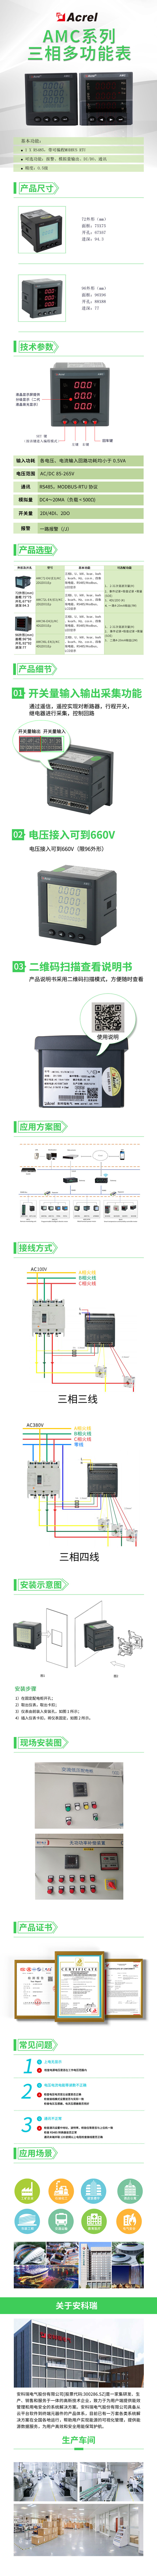 安科瑞AMC96L-E4/KC 660V电压接入<strong>多功能电表</strong>示例图1